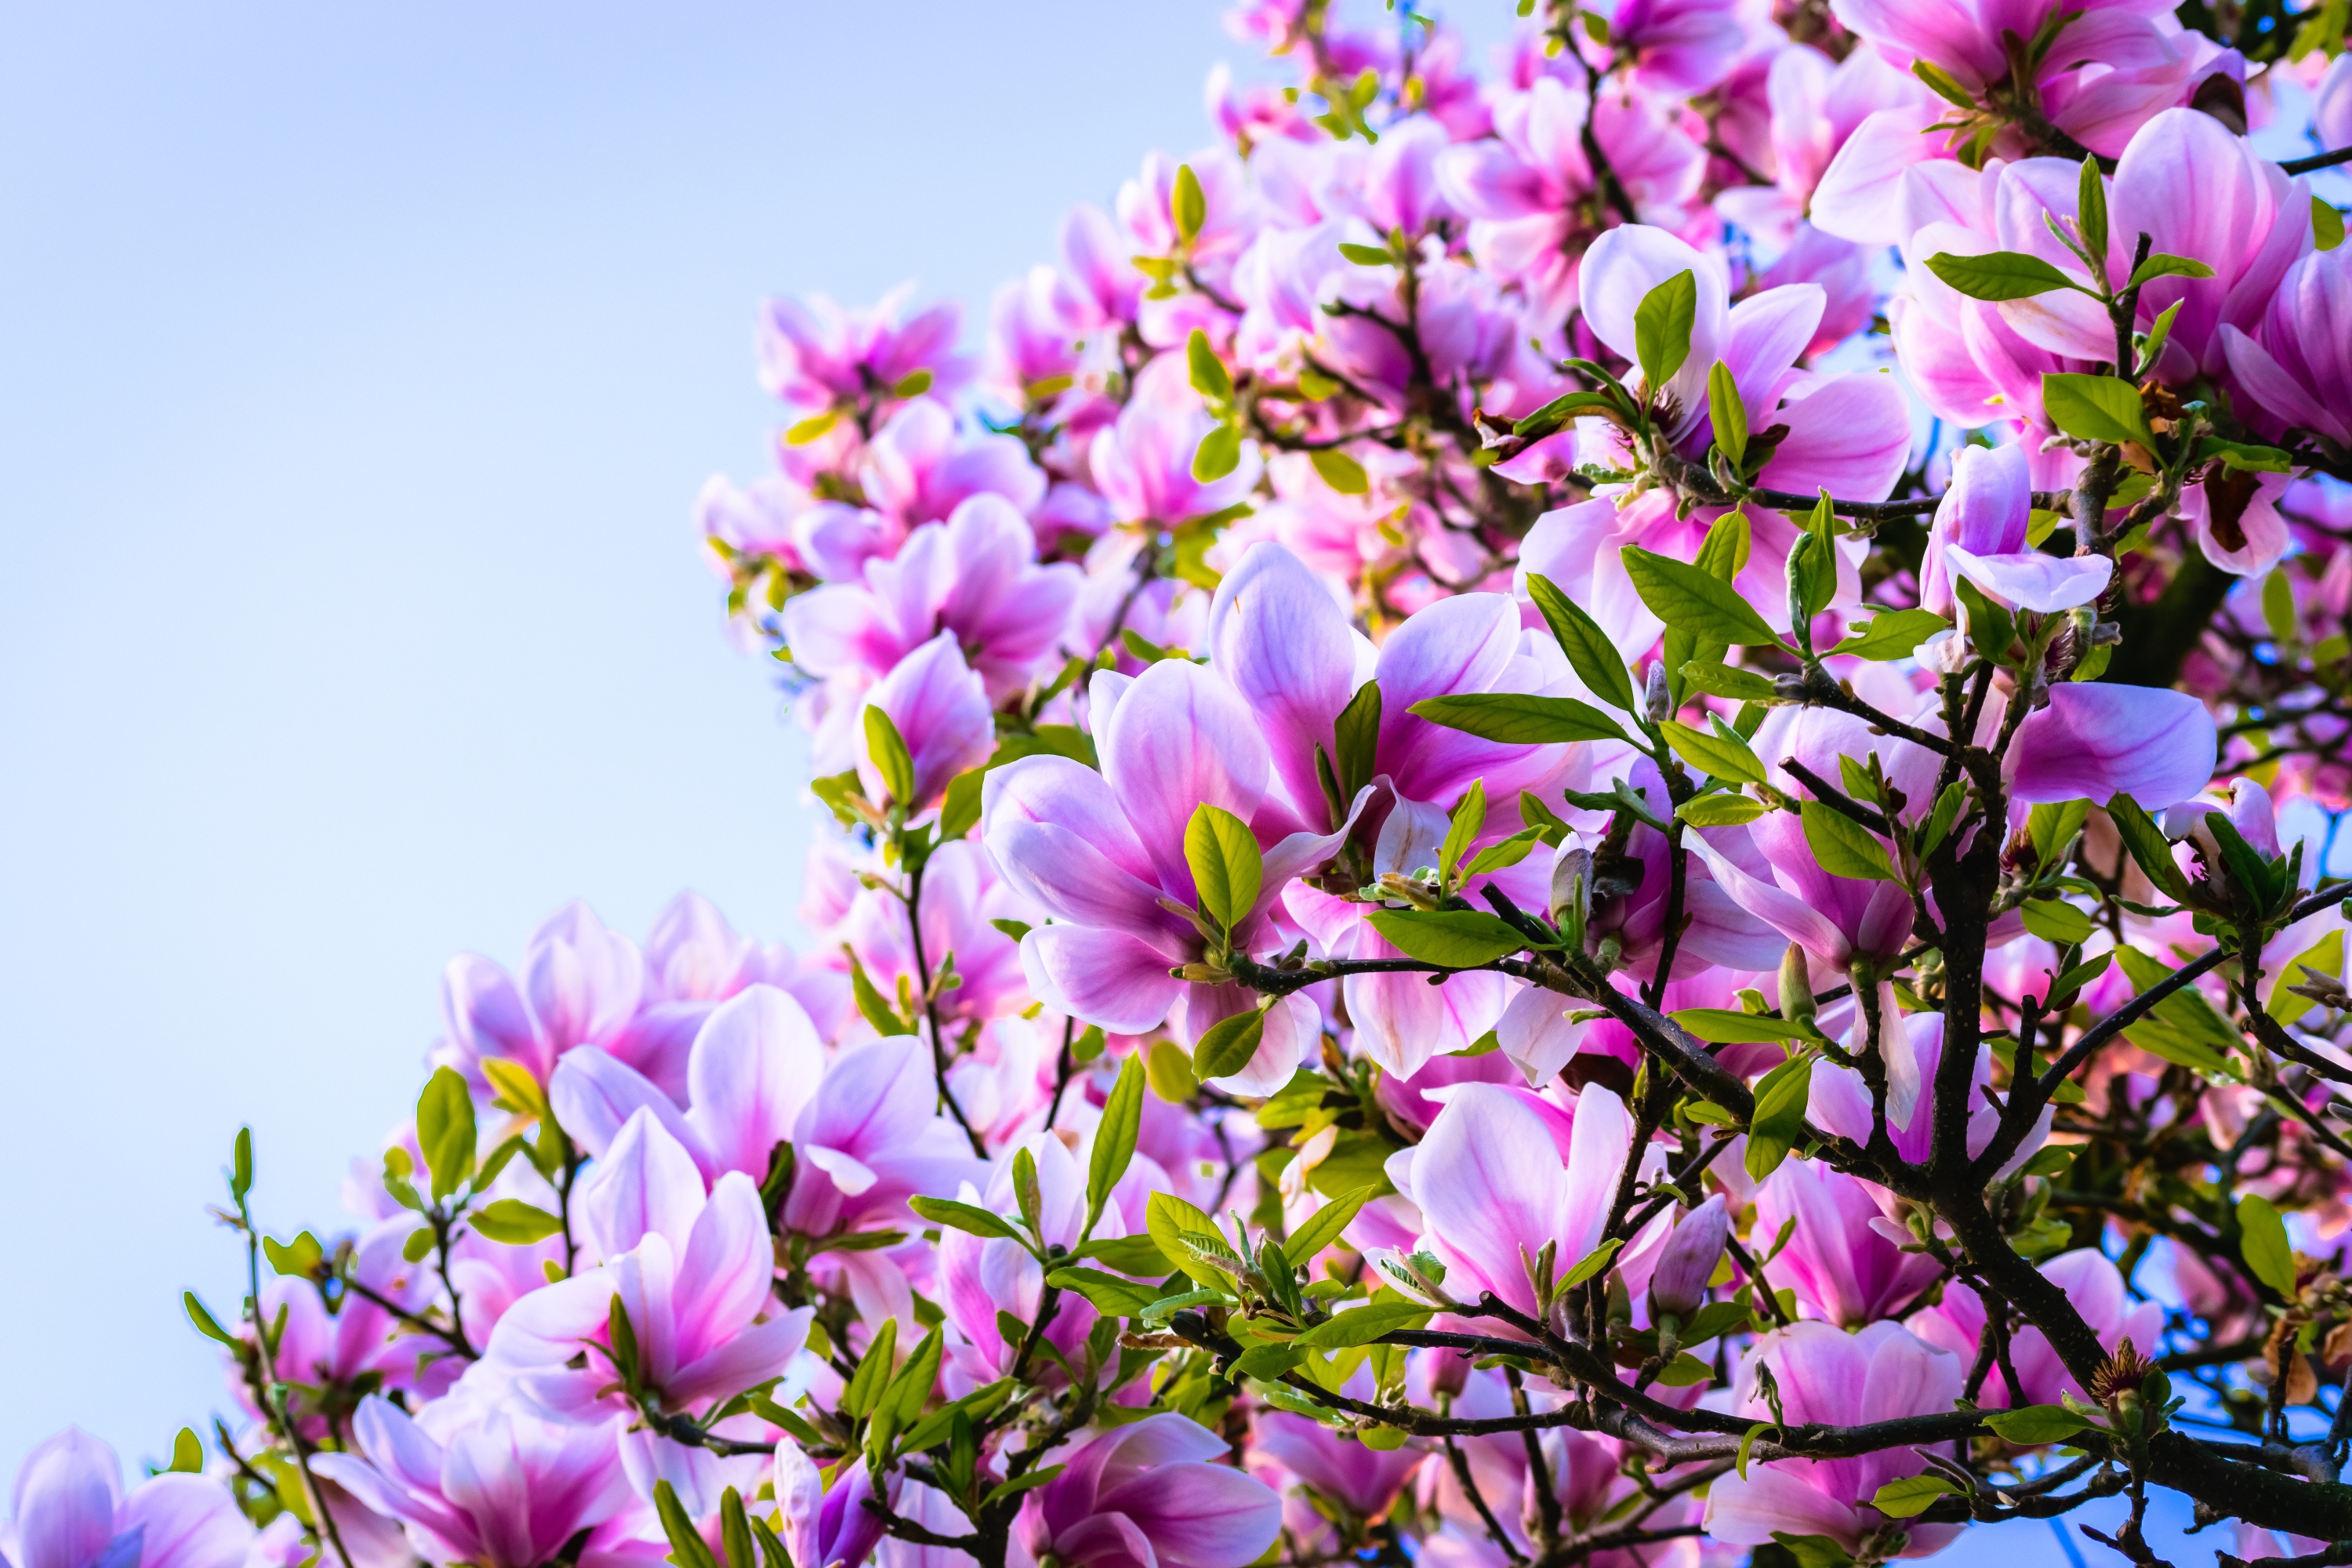 417101 descargar imagen tierra/naturaleza, magnolia, rama, flor, naturaleza, flor rosa, primavera, árboles: fondos de pantalla y protectores de pantalla gratis